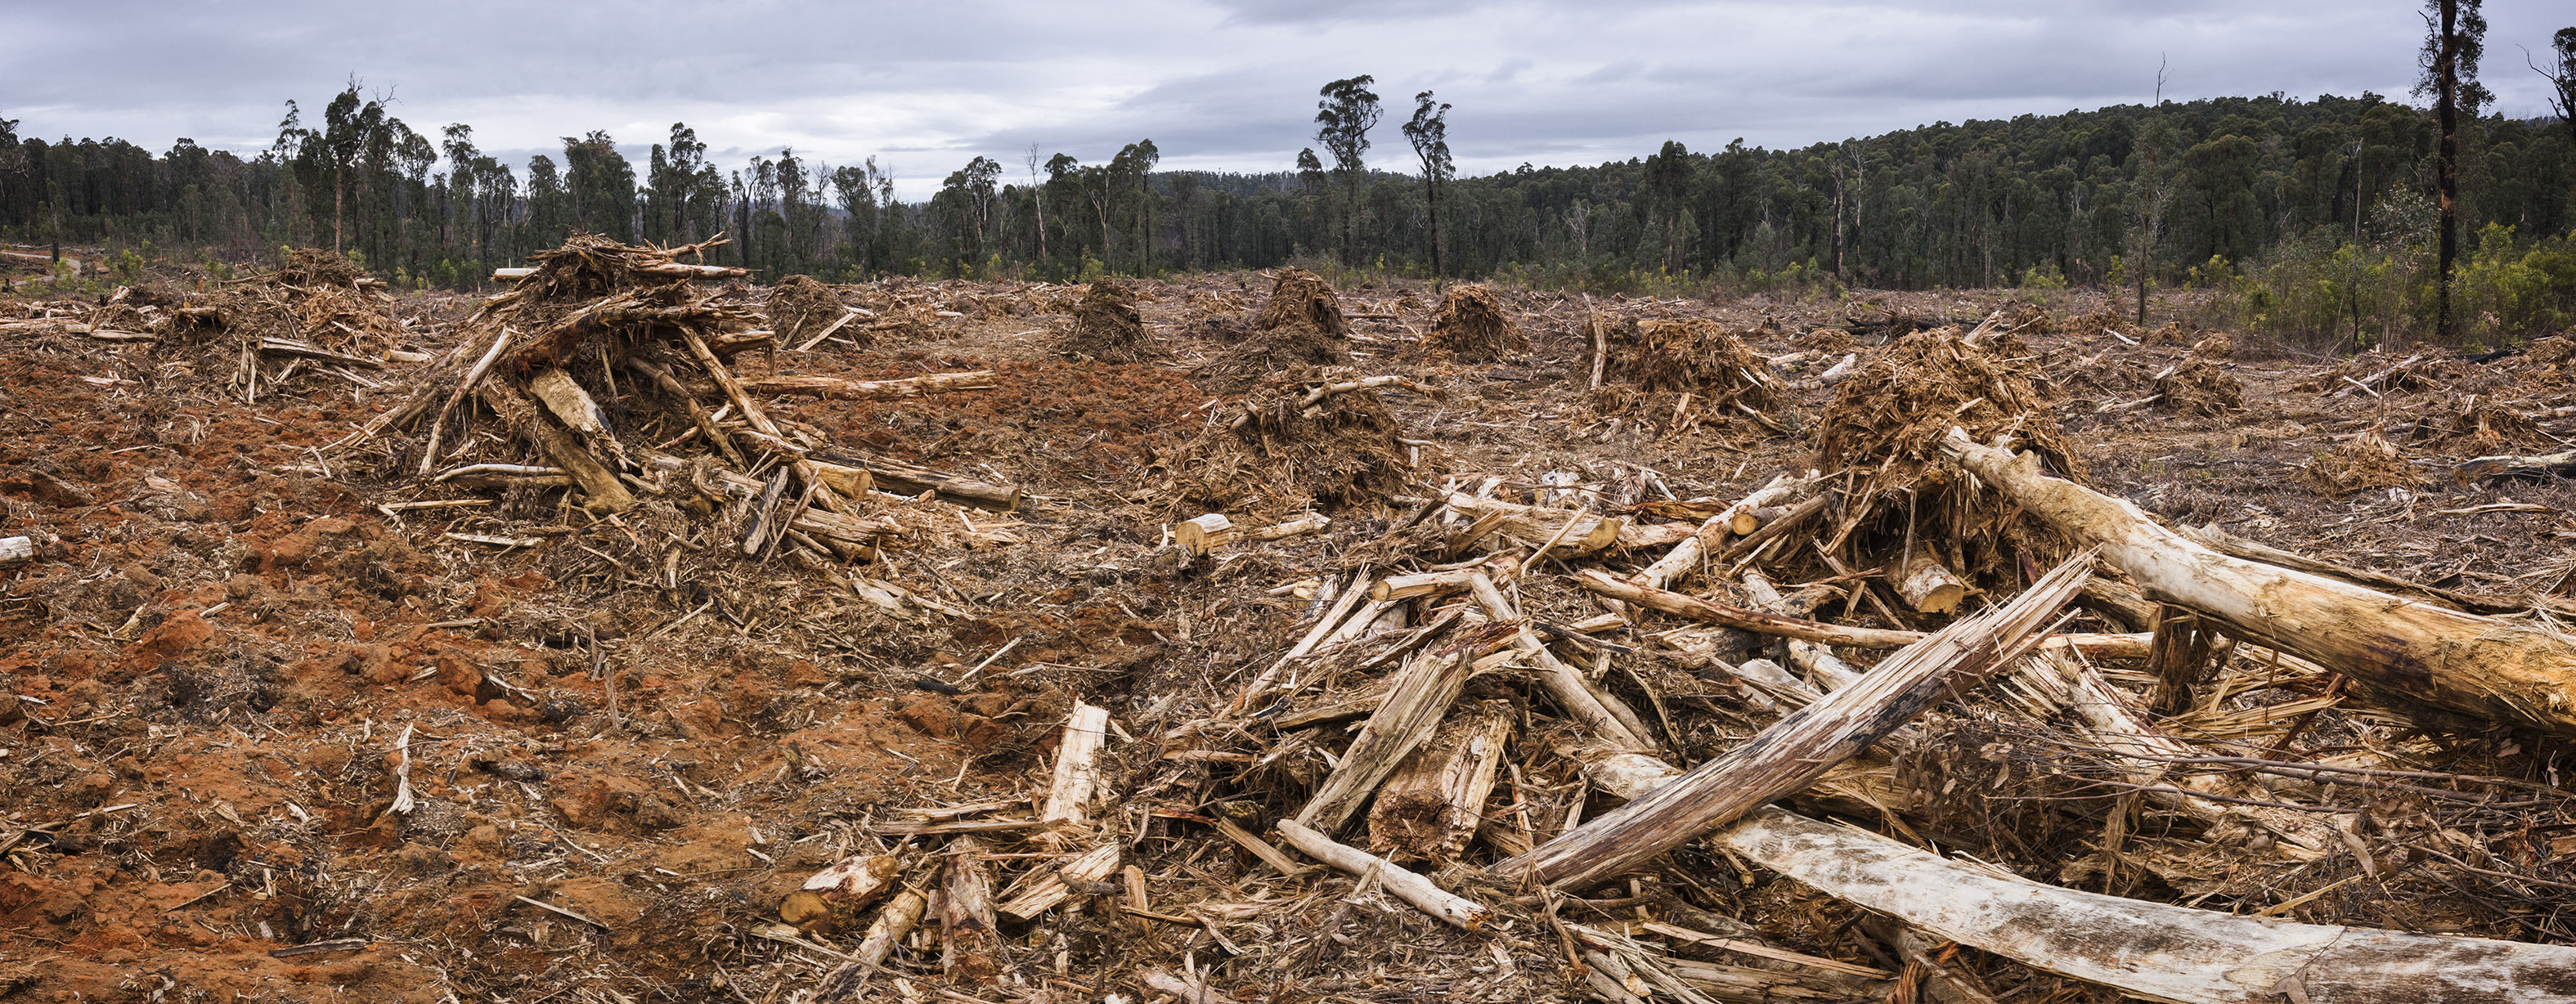 Vicforests tries to get green tick for logging endangered forests - FoEM